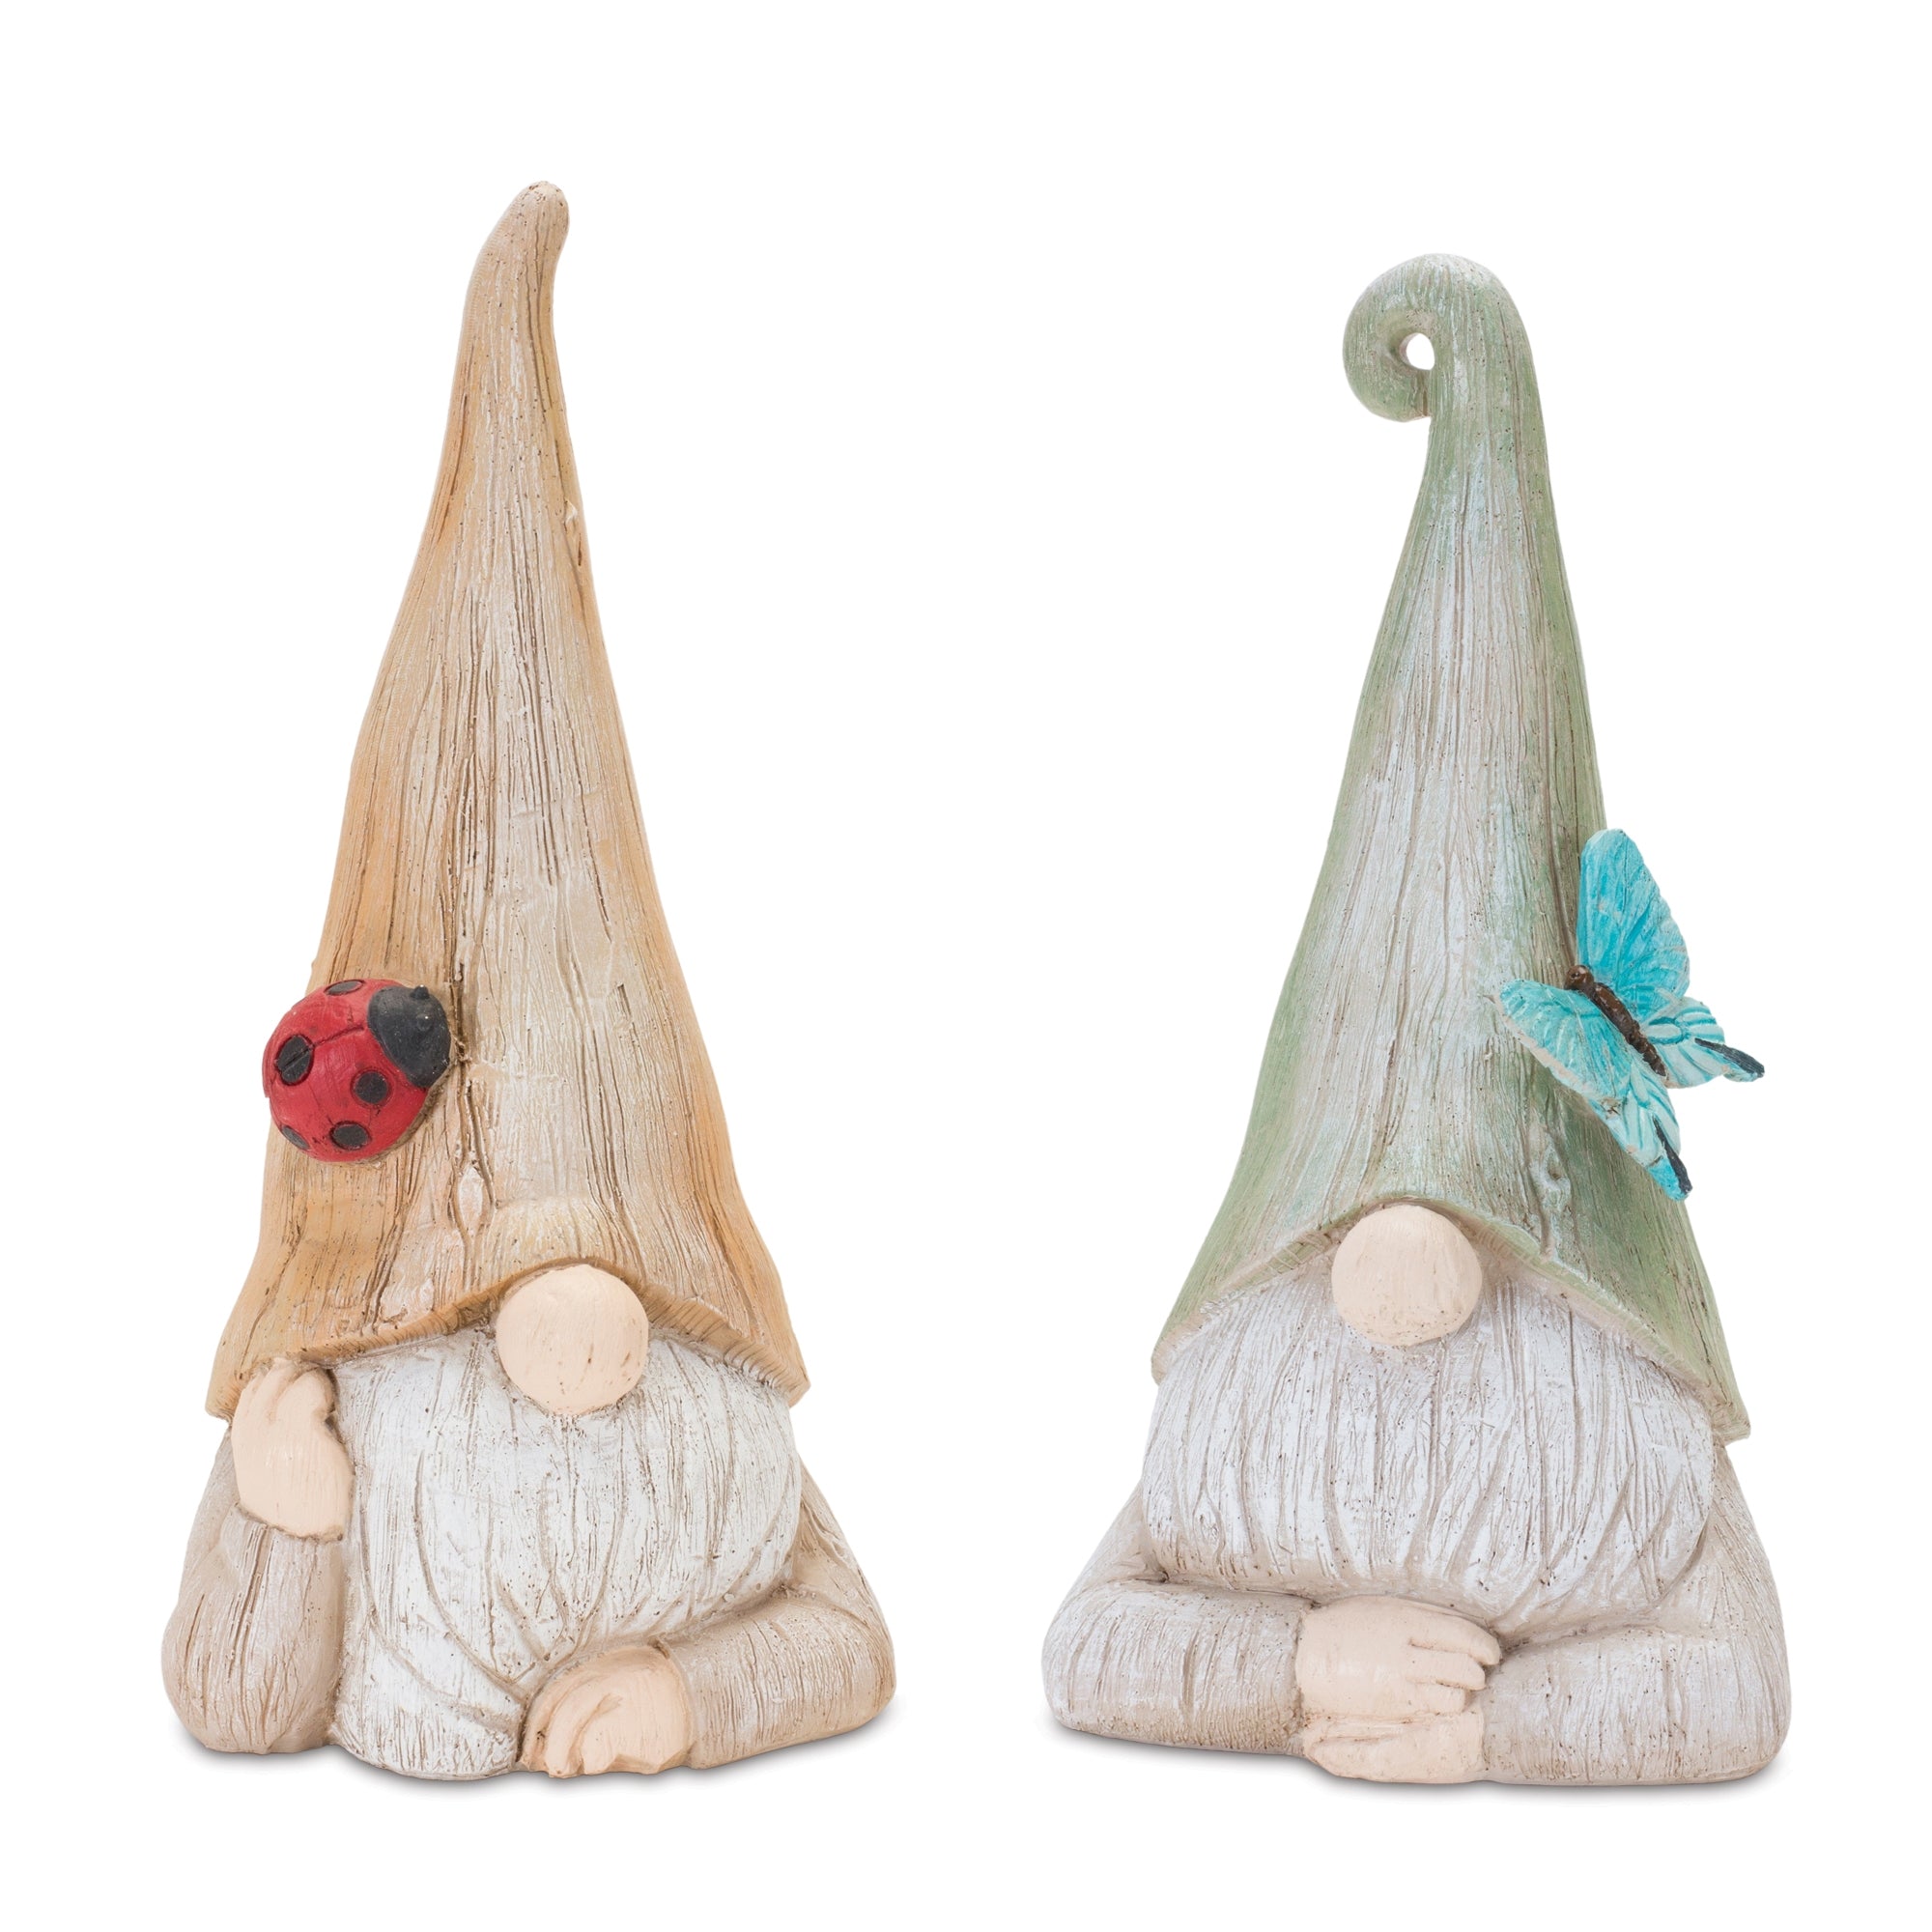 Gnome Statue with Wood Grain Design (Set of 2)